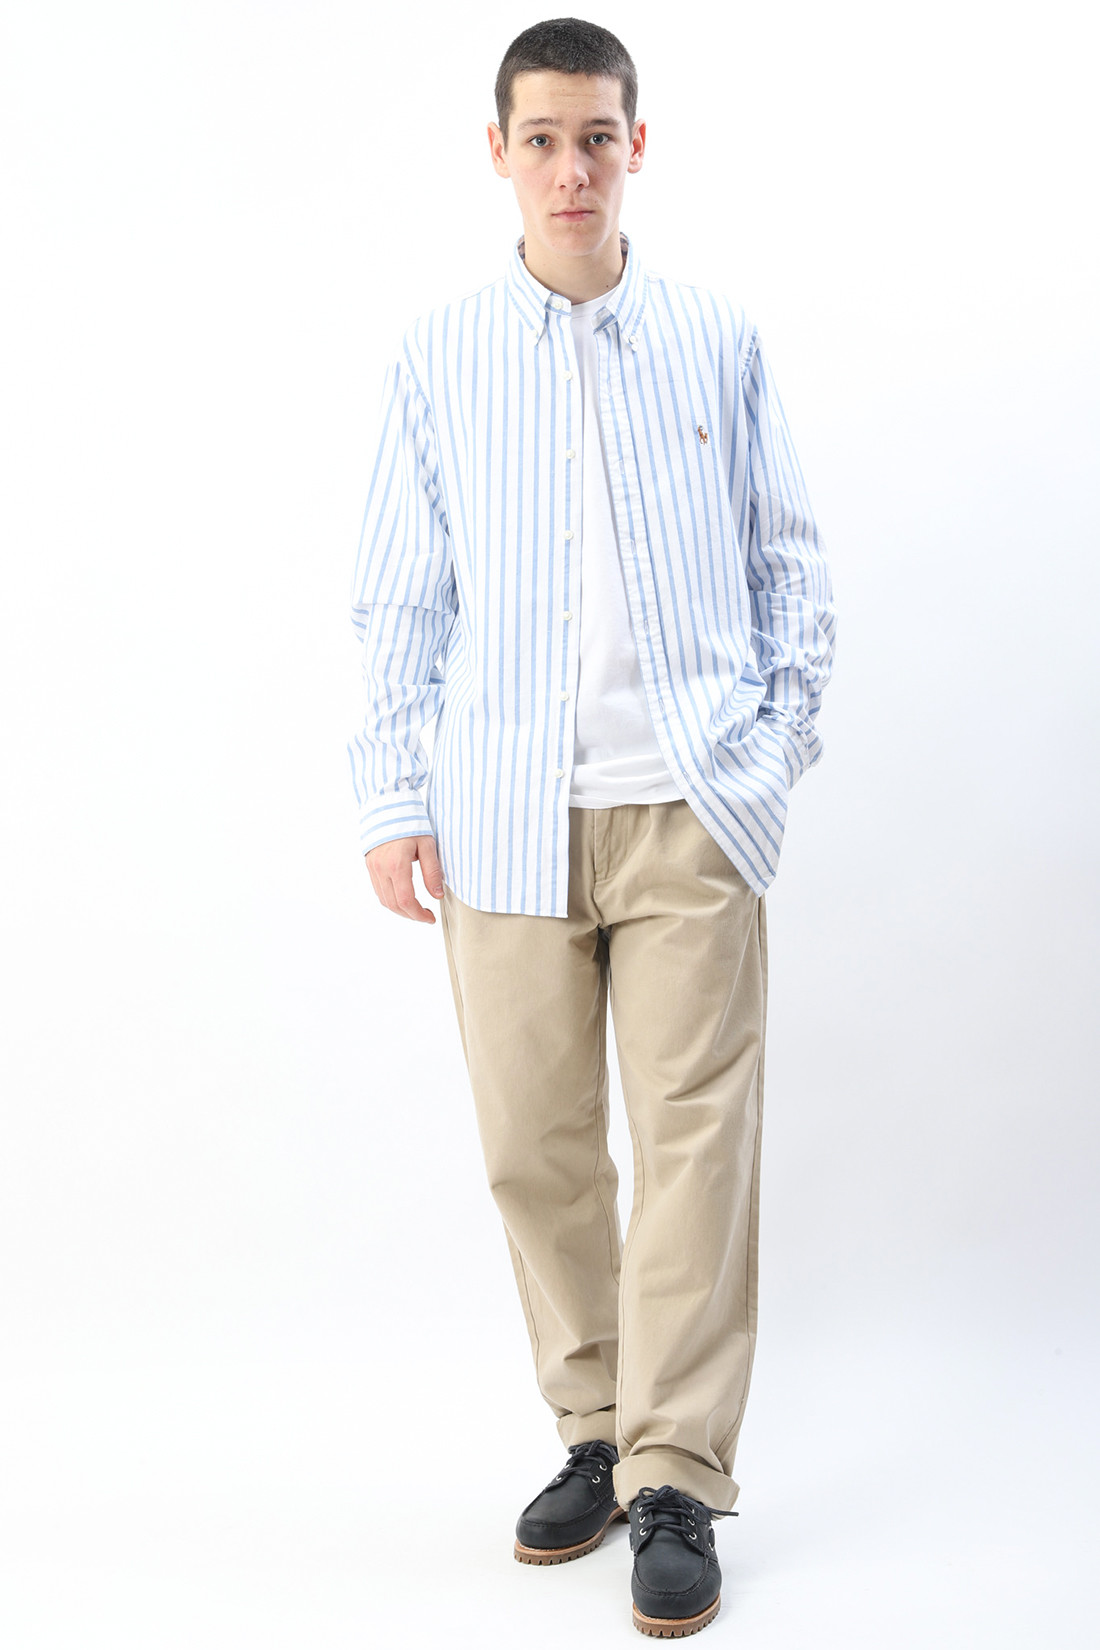 Custom fit stripe shirt Blue/white